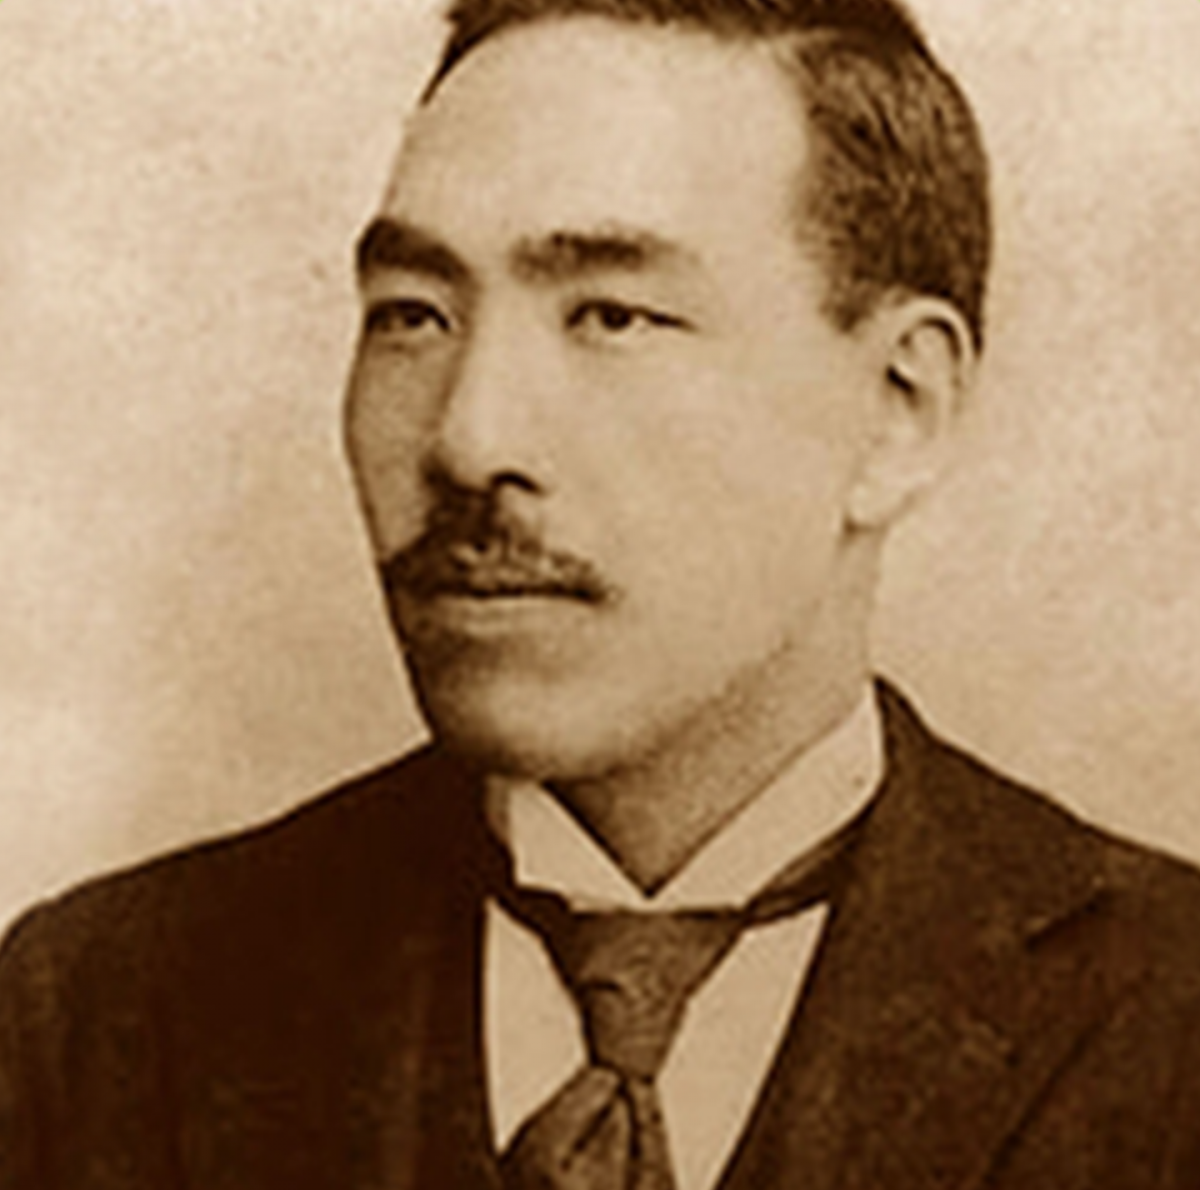 Taichiro Morinaga, the future father of HI-CHEW